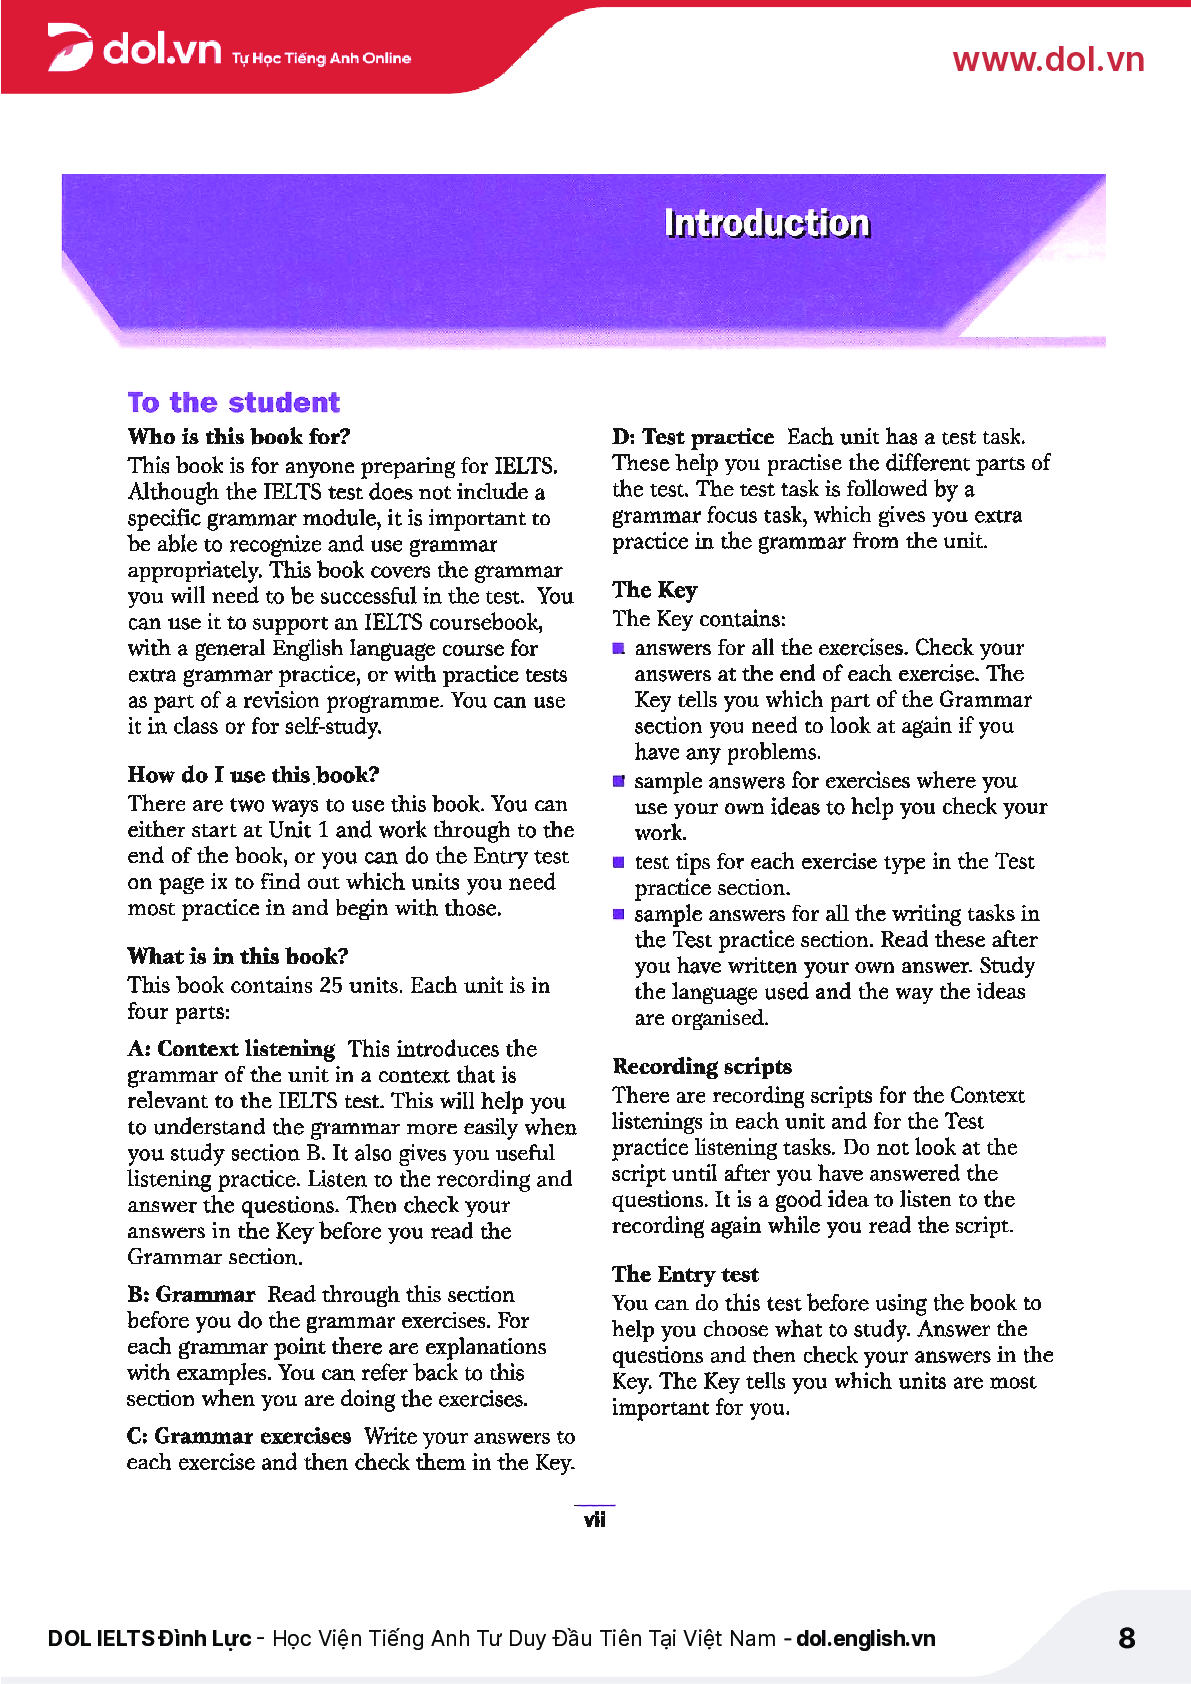 Sách Cambridge Grammar for IELTS pdf | Xem online, tải PDF miễn phí (trang 8)